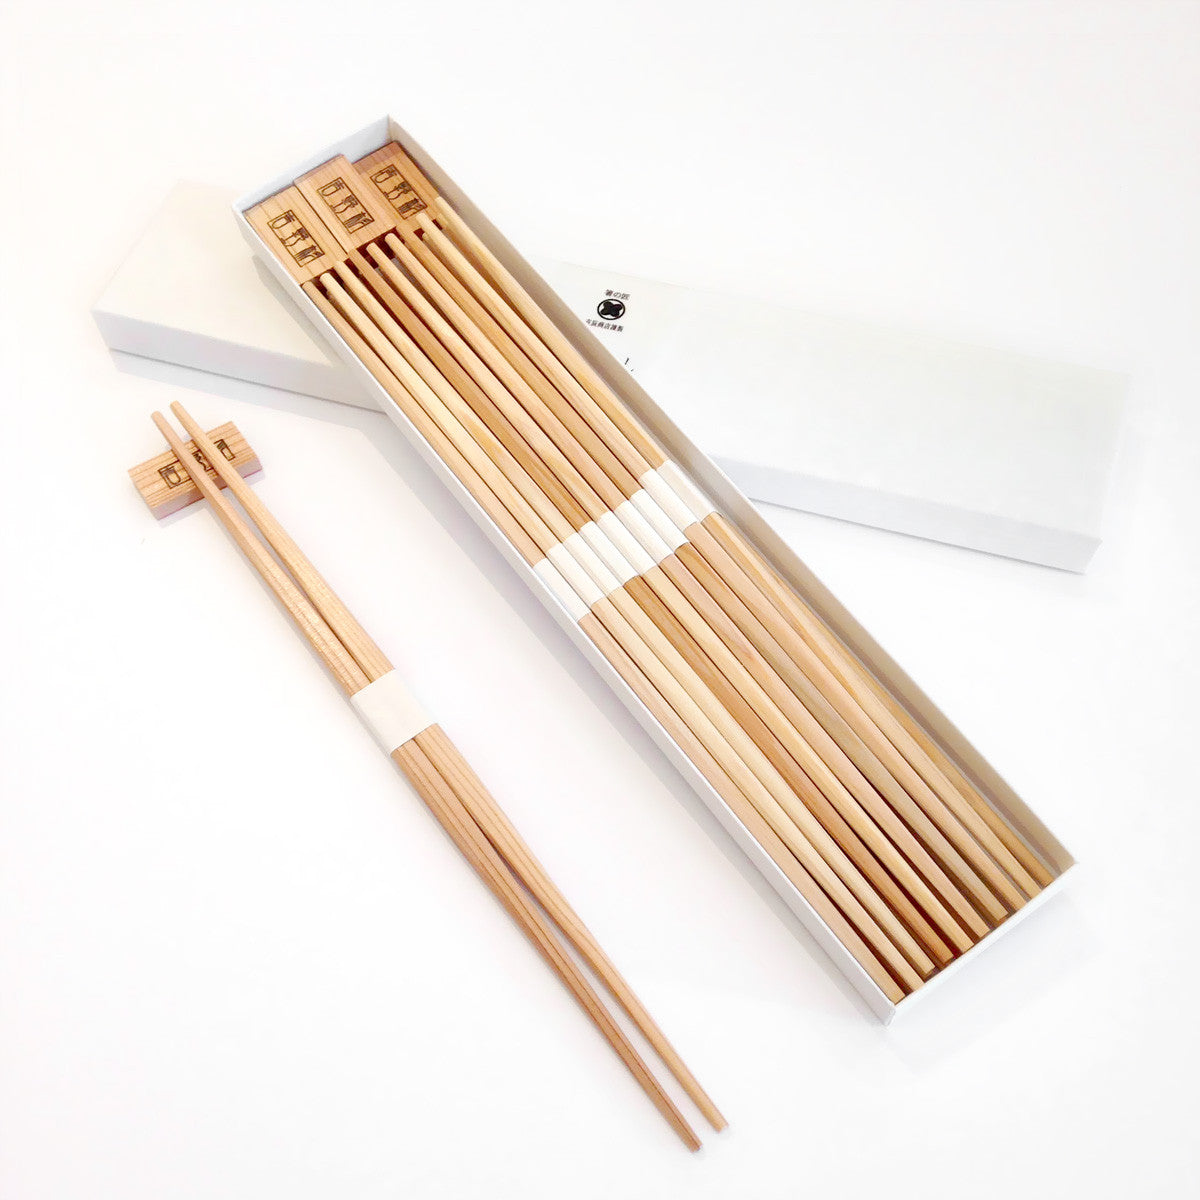 Yoshino Cedar Chopsticks with Chopsticks Rest - 10 pair